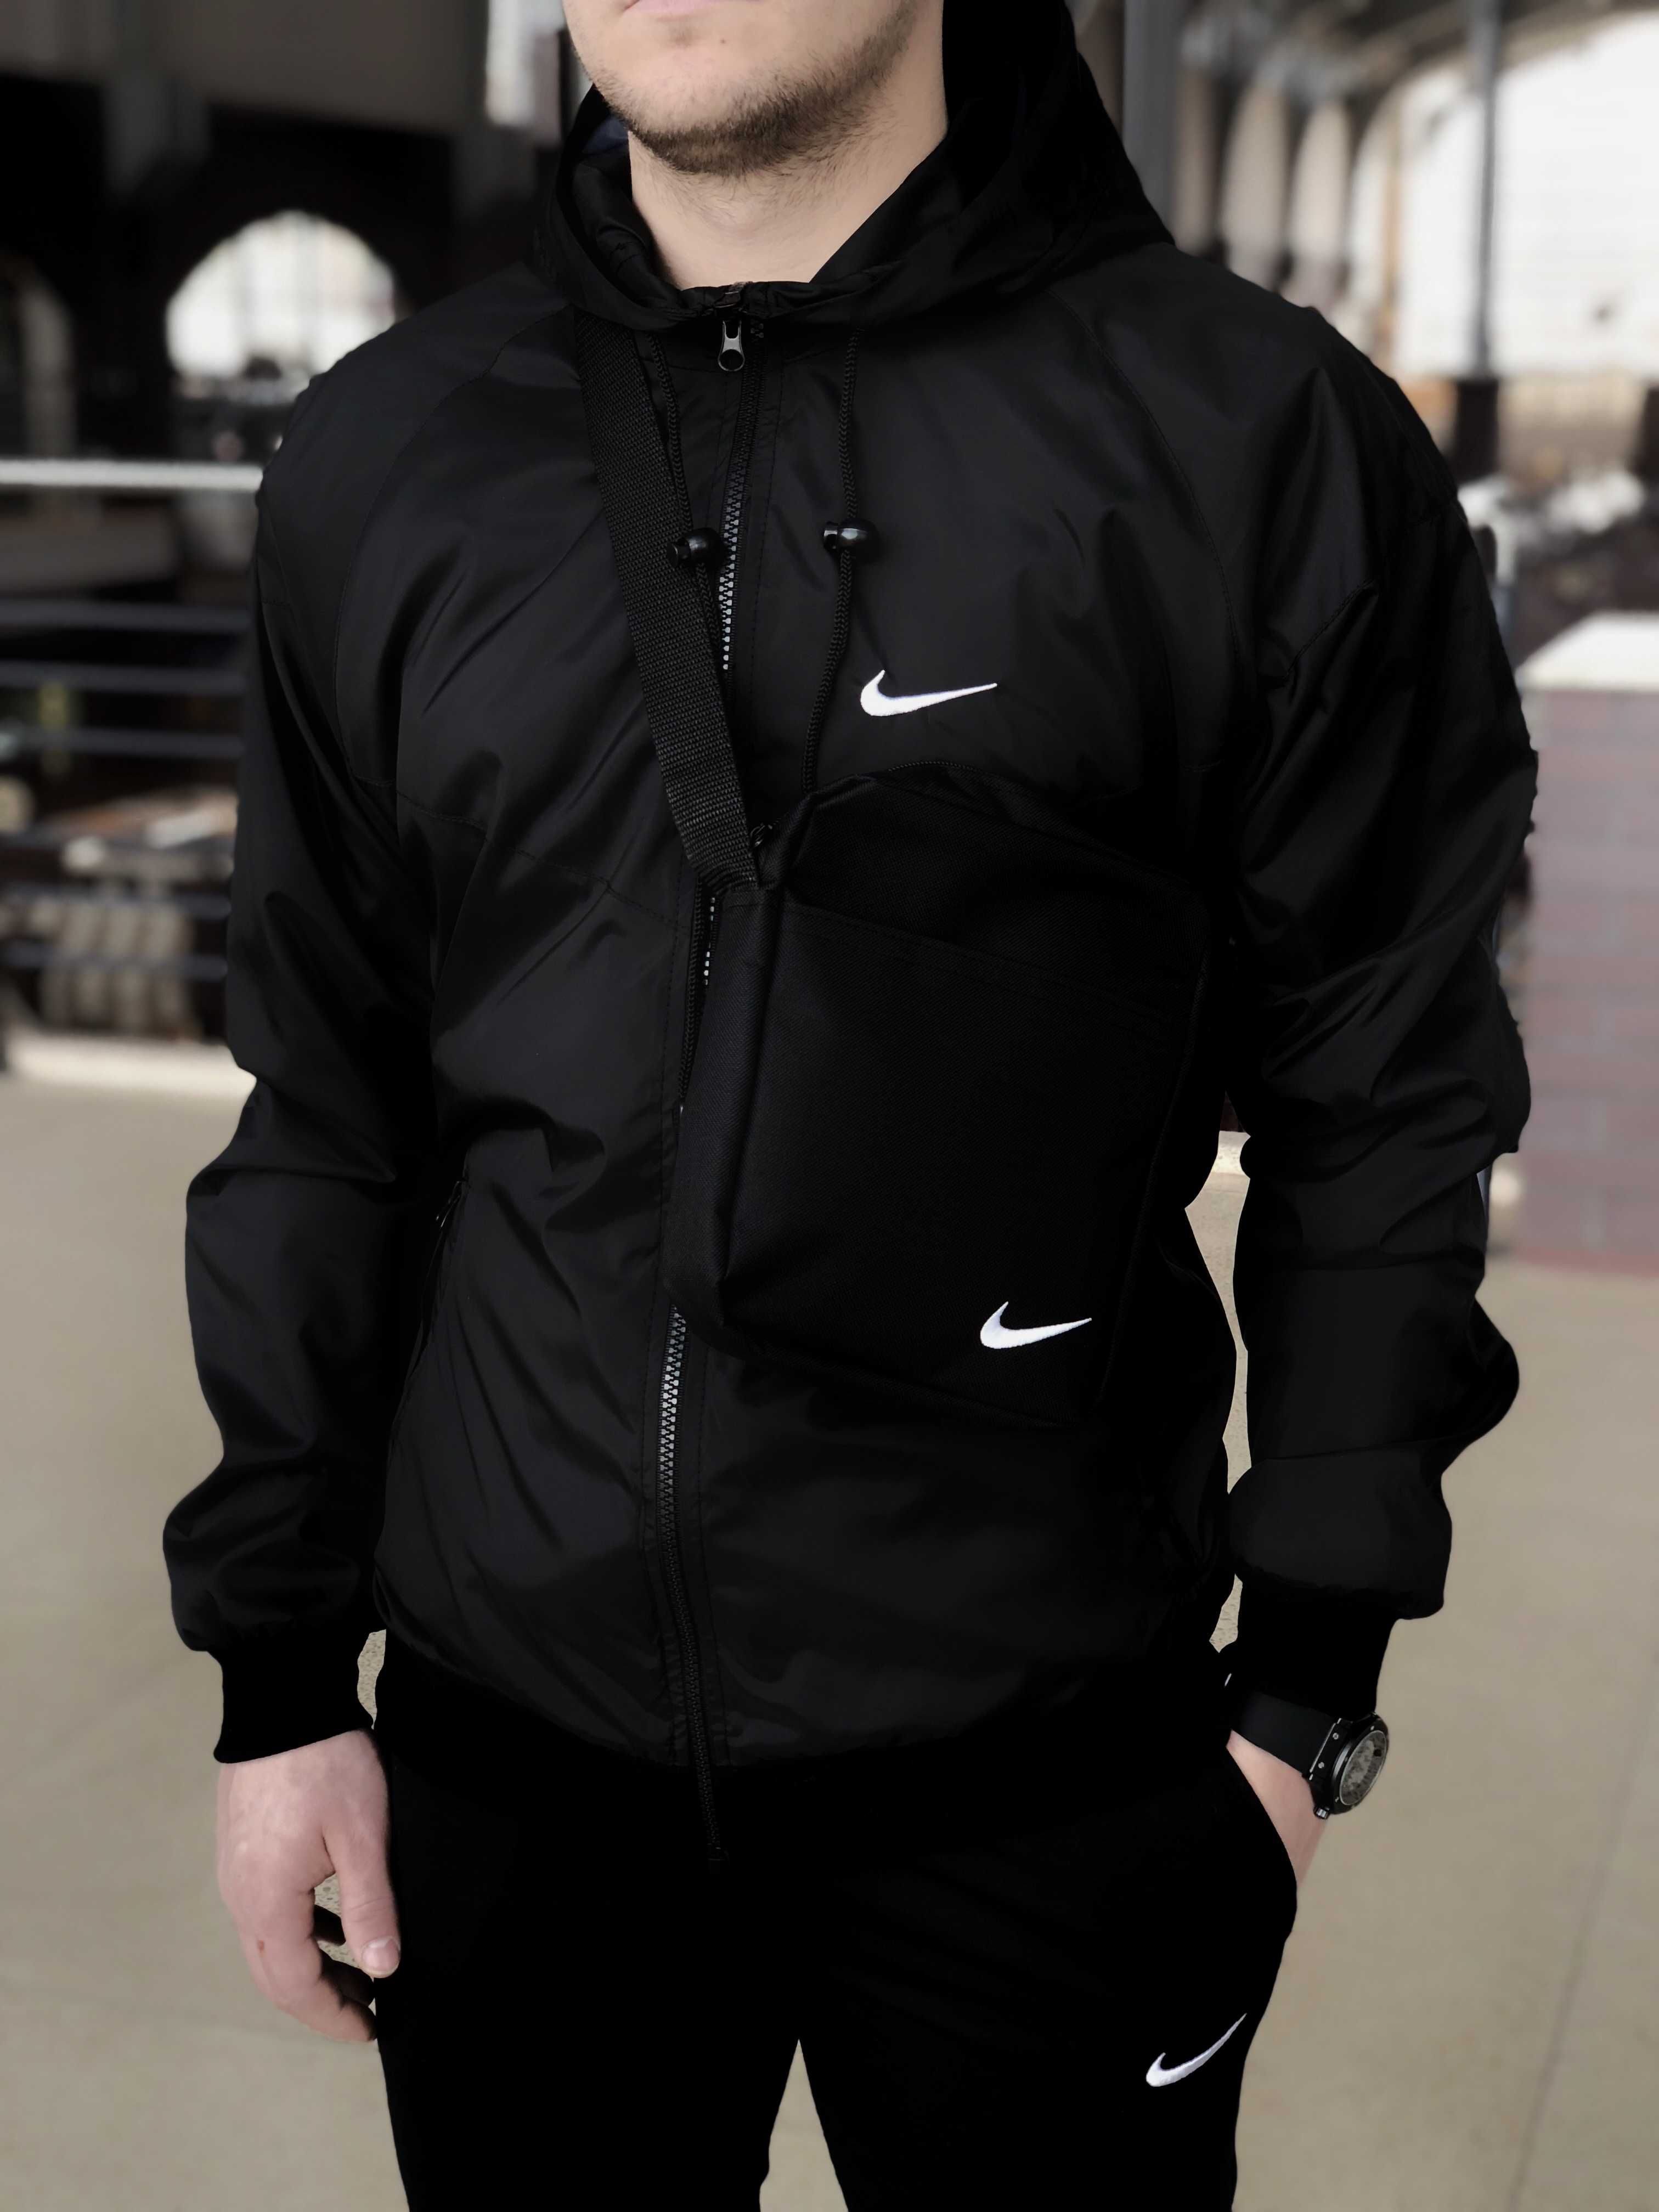 Ветровка мужская Nike весенняя осенняя спортивная Куртка Найк